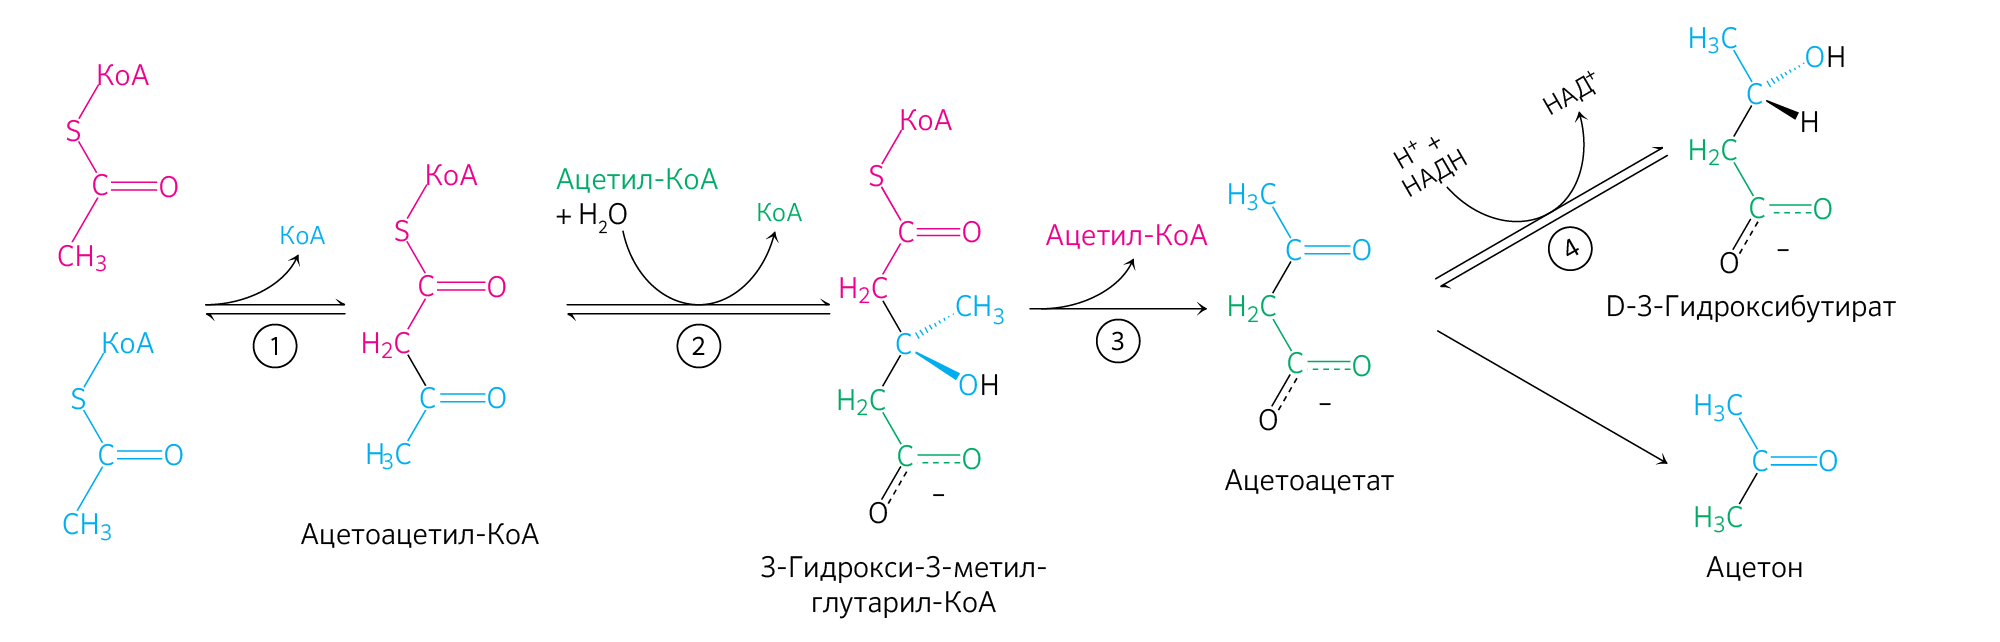 Молекула ацетил коа. Велосипед Кребса биохимия. Щук биохимия. Ацетоацетат в ацетил КОА. Ацетил-КОА это в биохимии.